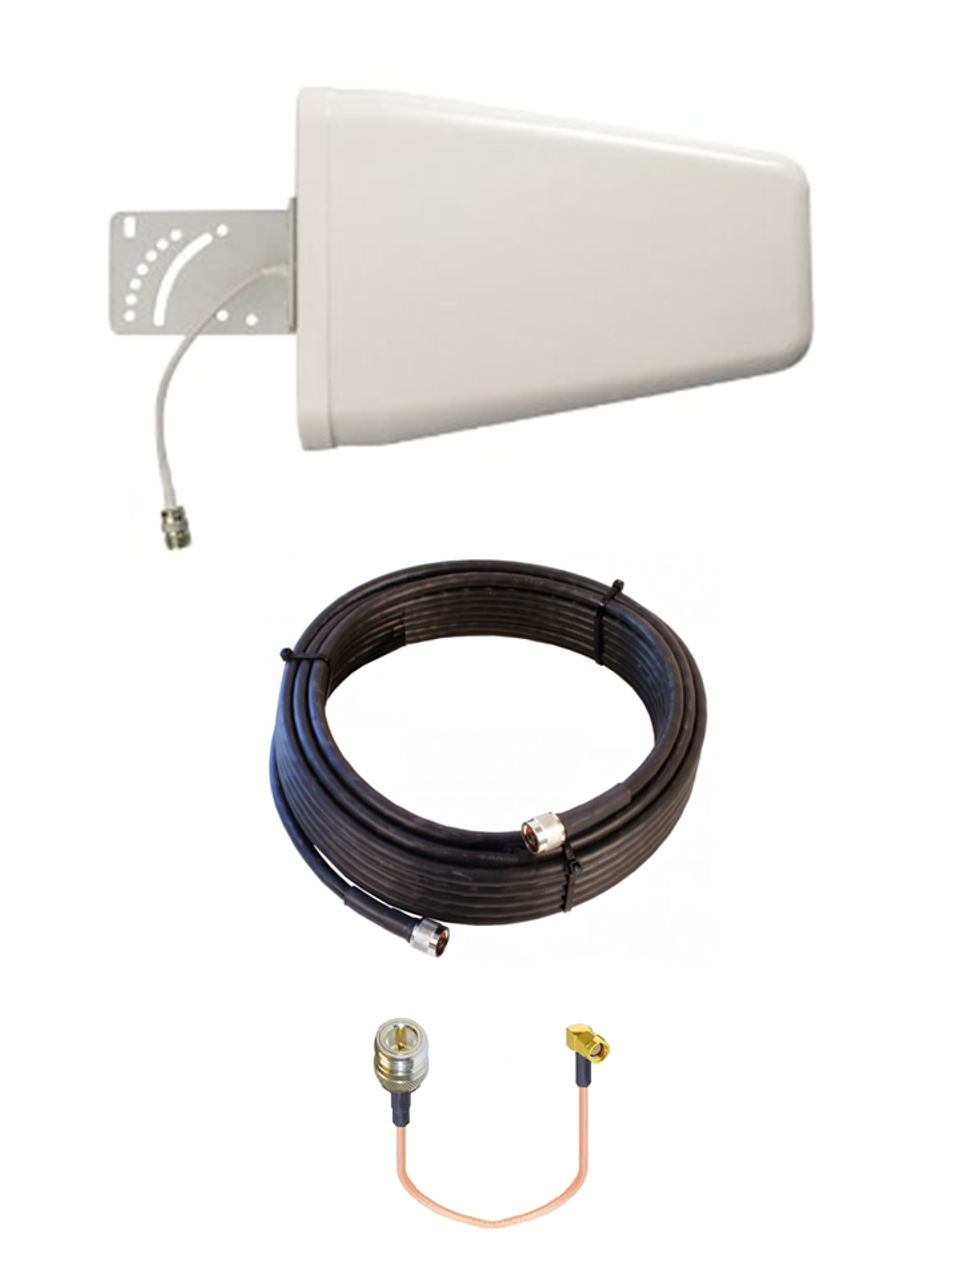 Peplink Balance-20X - 10dB Yagi 4G 5G LTE XLTE Antenna Coax w/ Cable Length Options